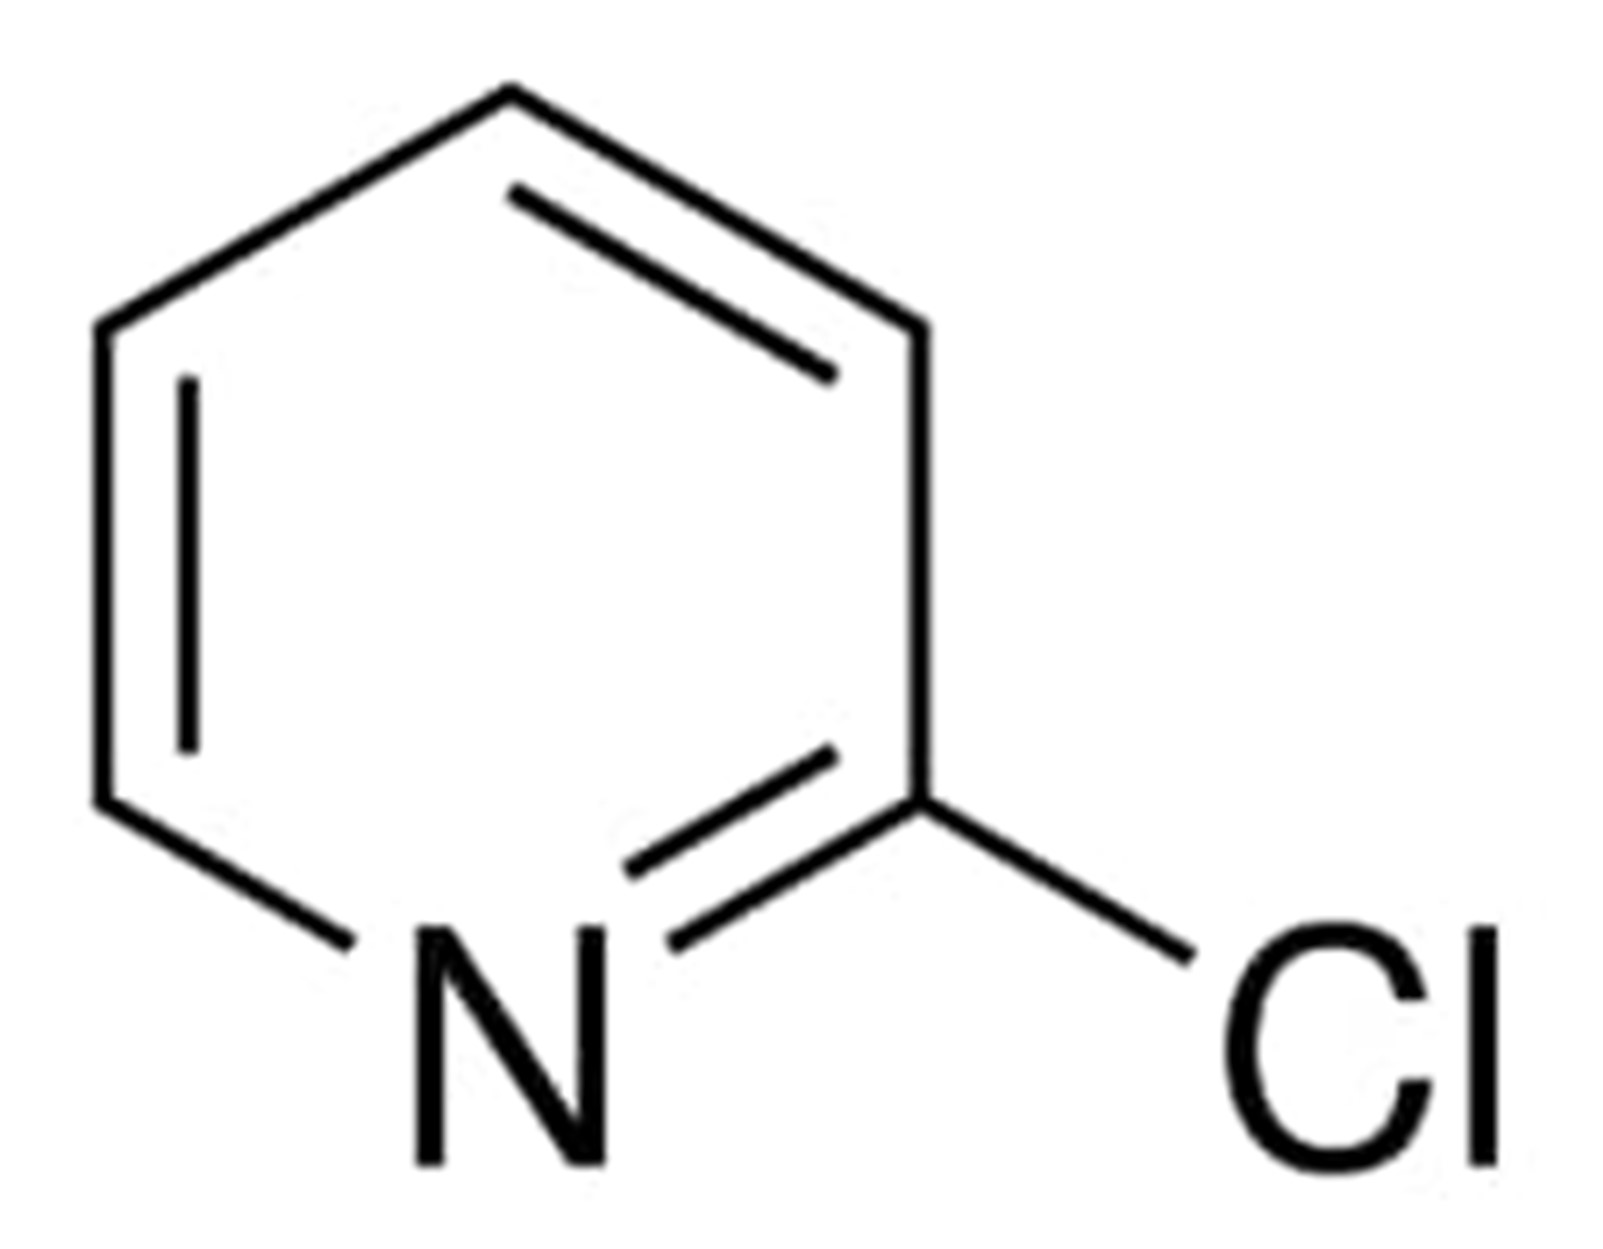 2-Chloropyridine